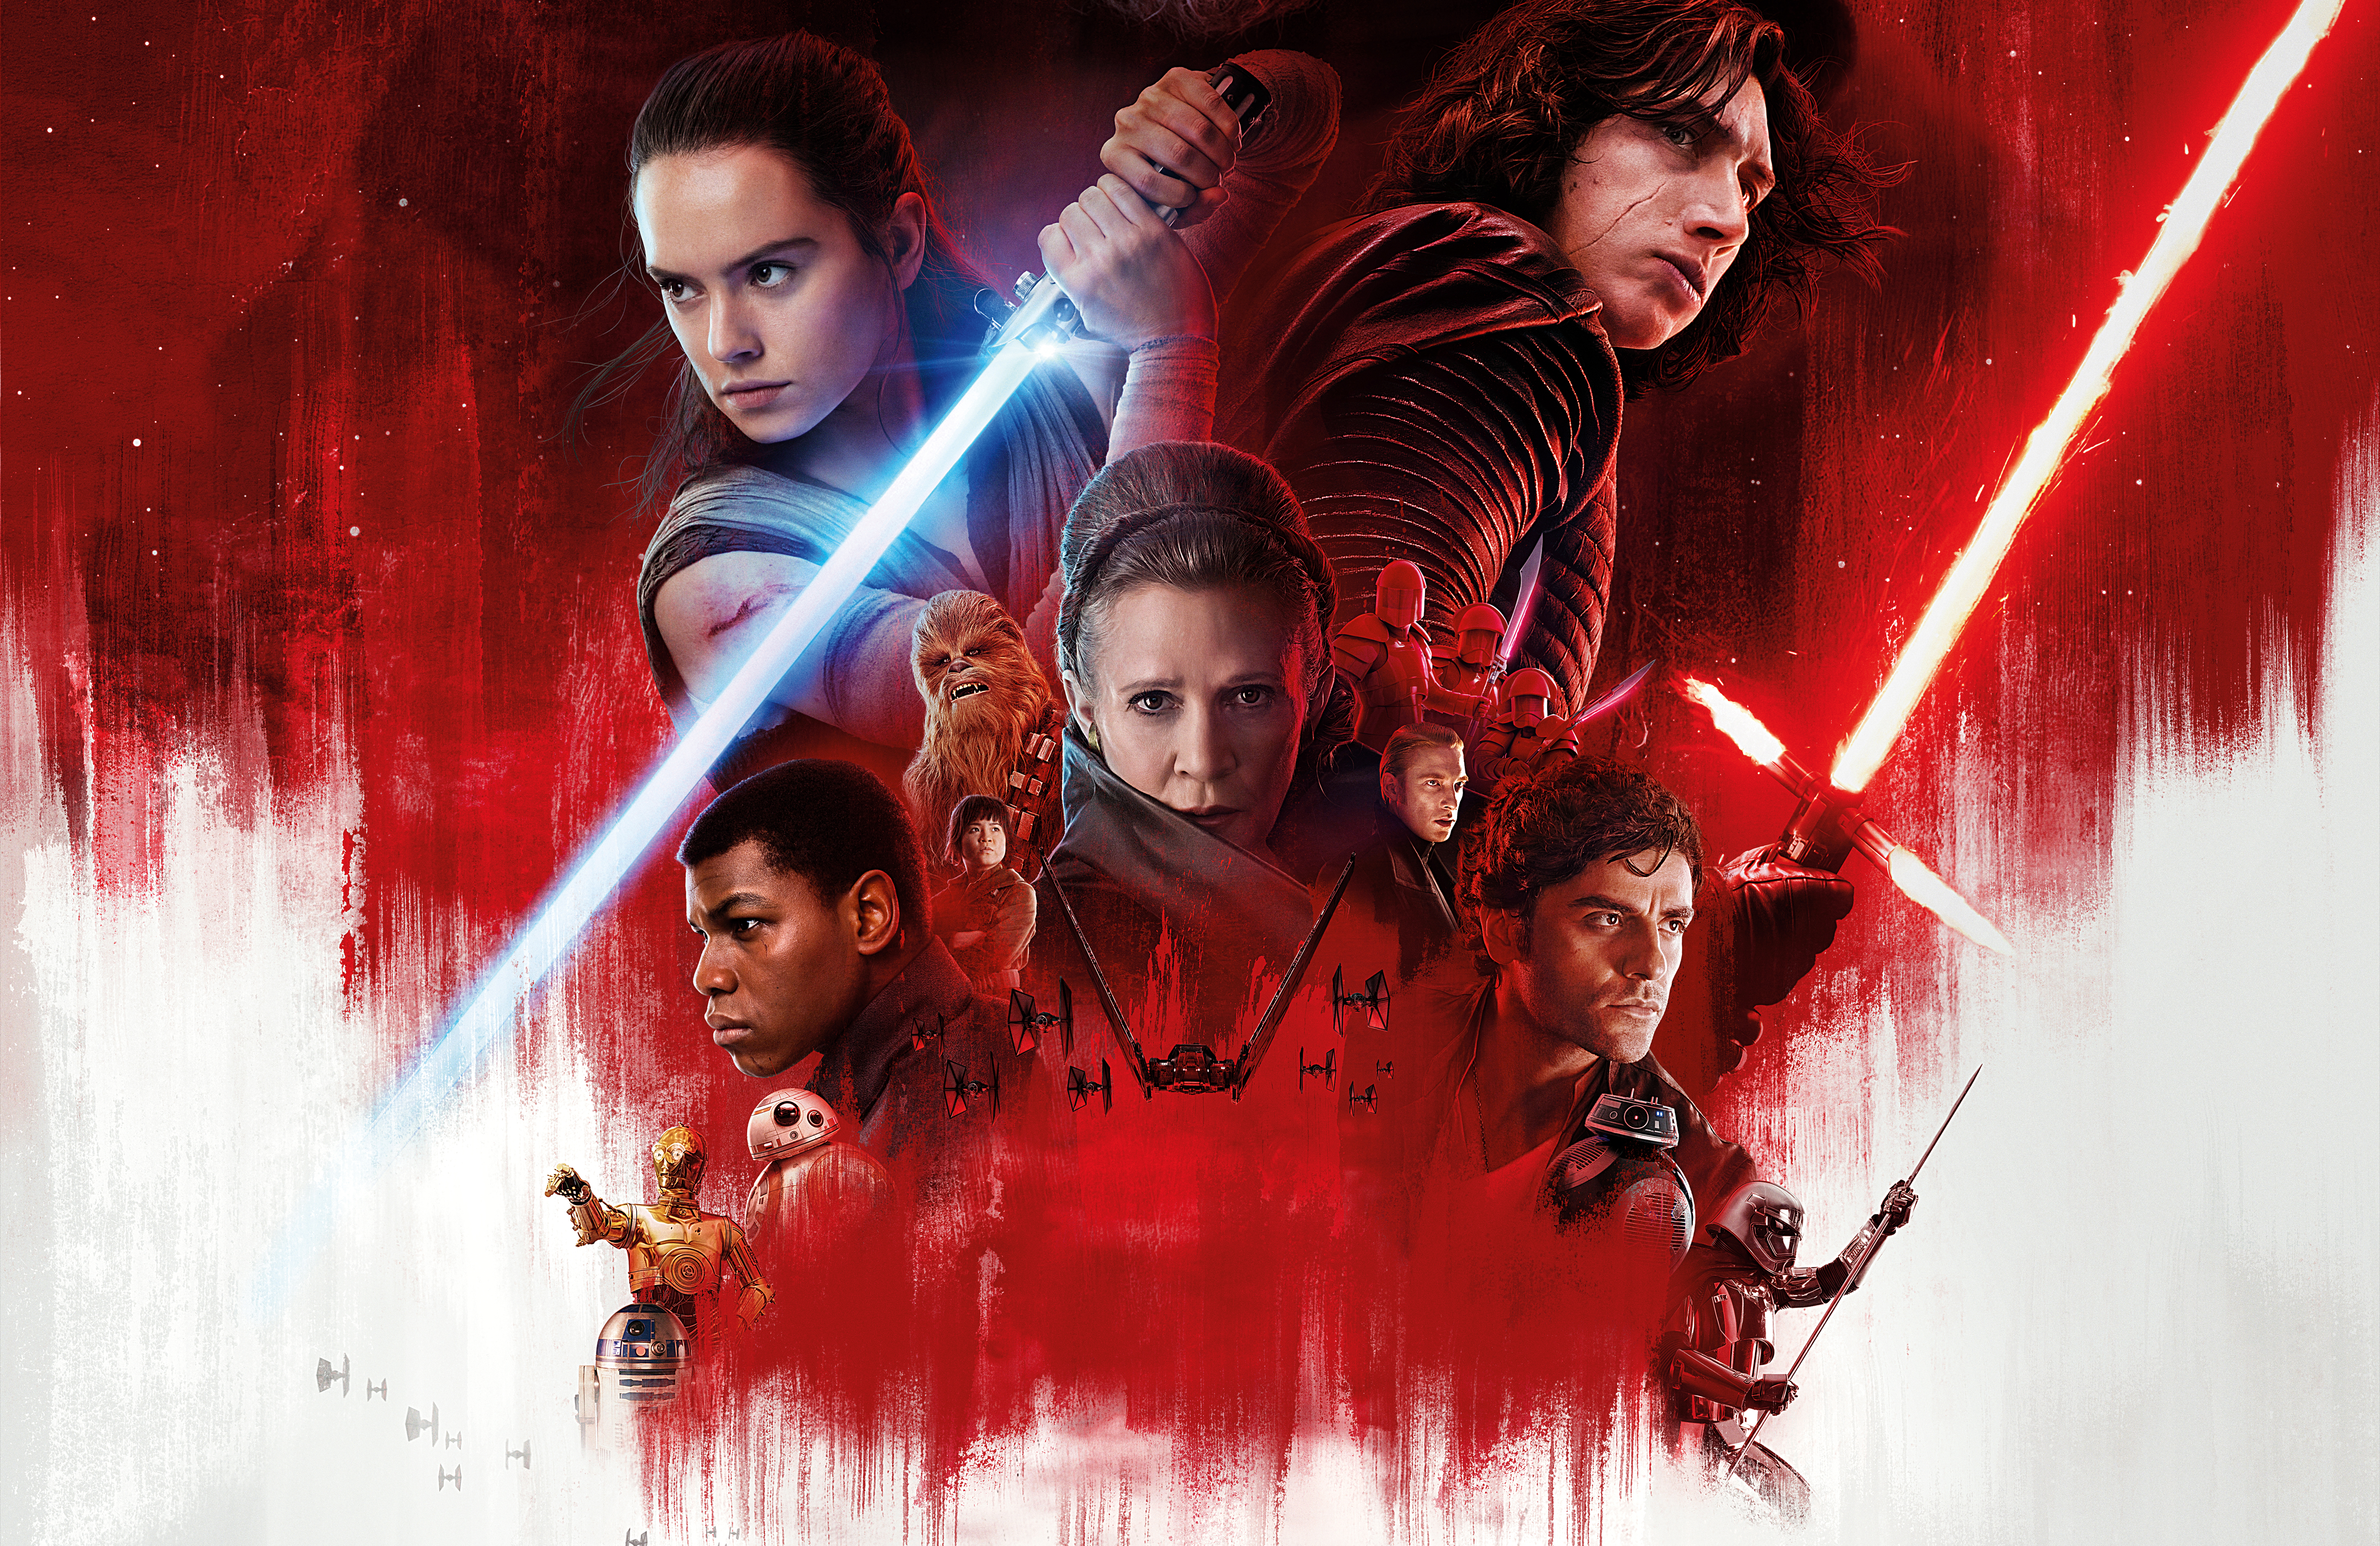 Star Wars Star Wars The Last Jedi Lightsaber Rey From Star Wars Movie Poster 5000x3247